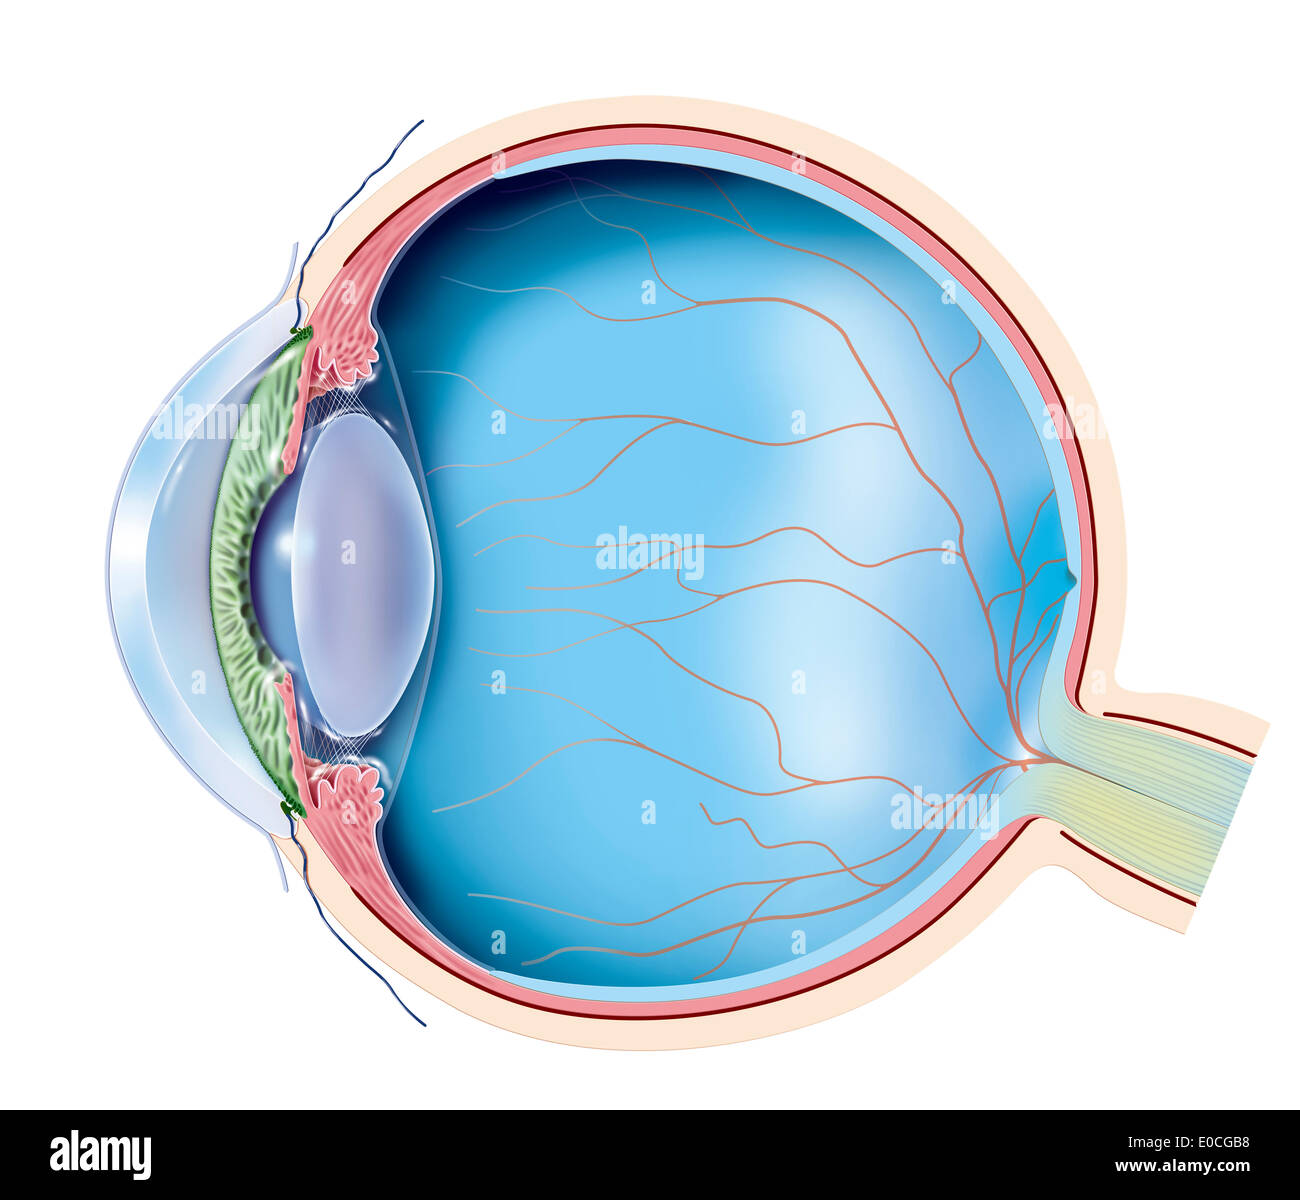 Anatomy, eye Stock Photo